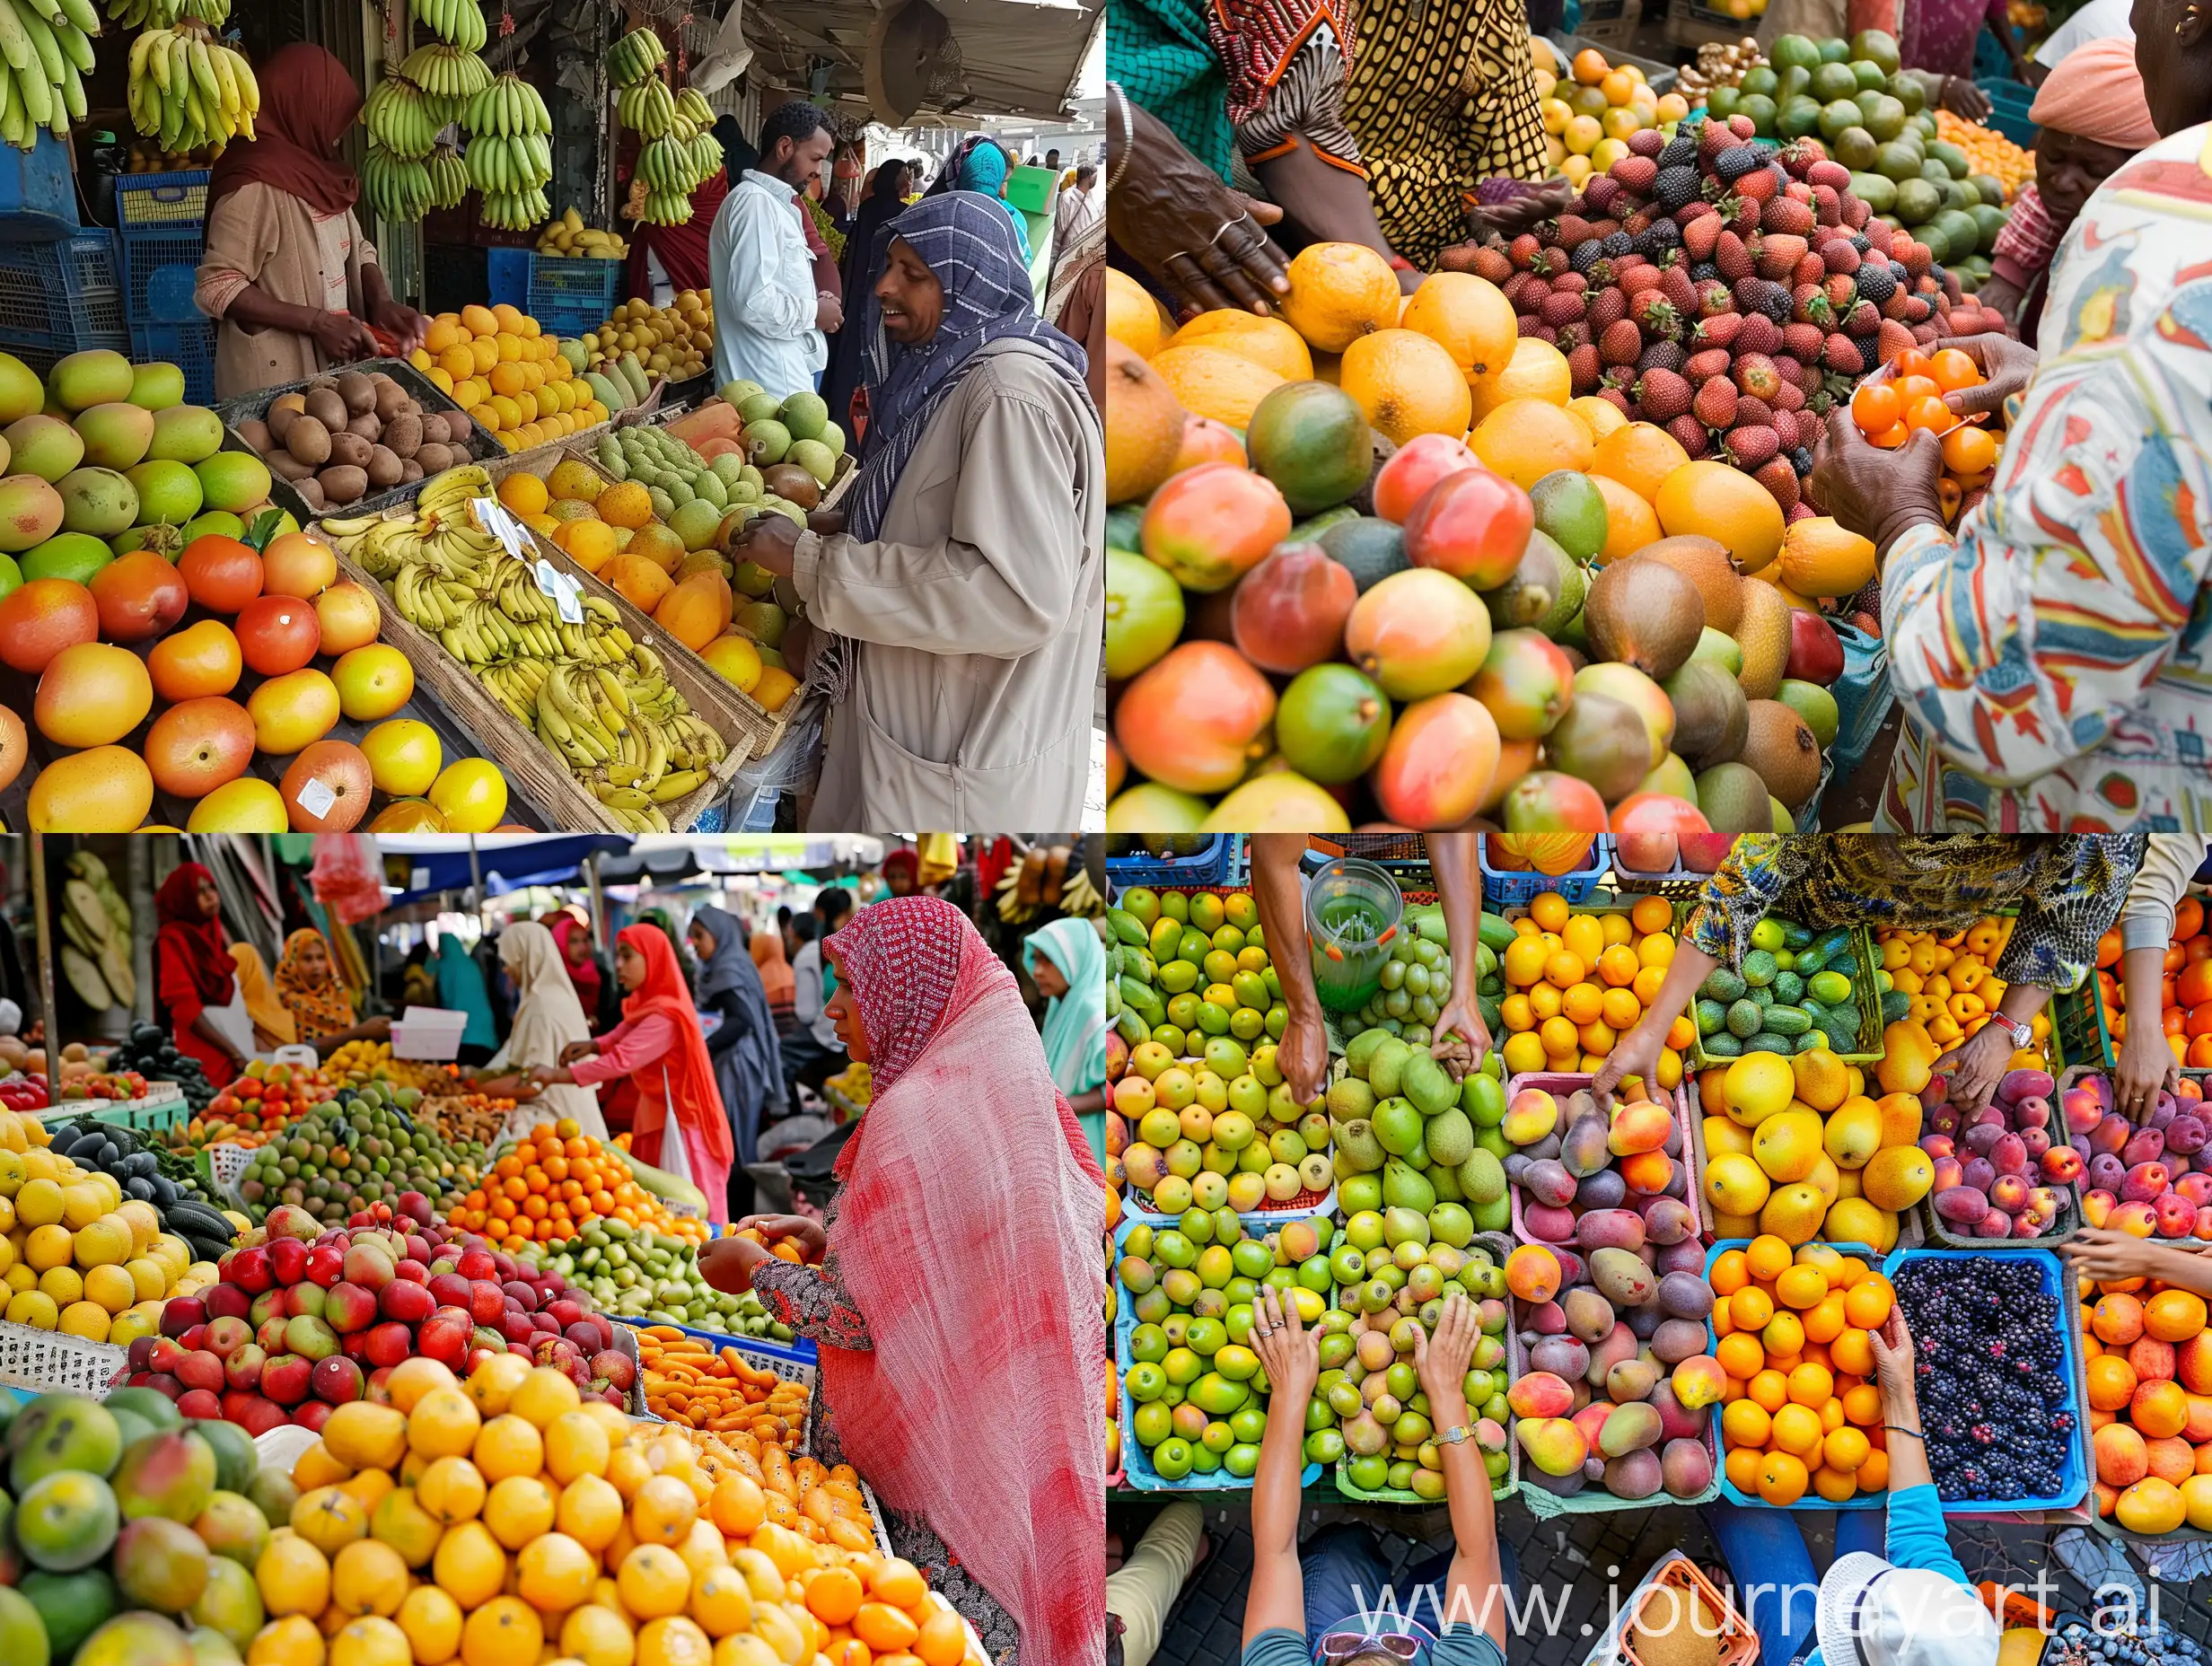 Vibrant-Fruit-and-Vegetable-Market-Diverse-Shoppers-Exploring-Fresh-Produce-Stalls